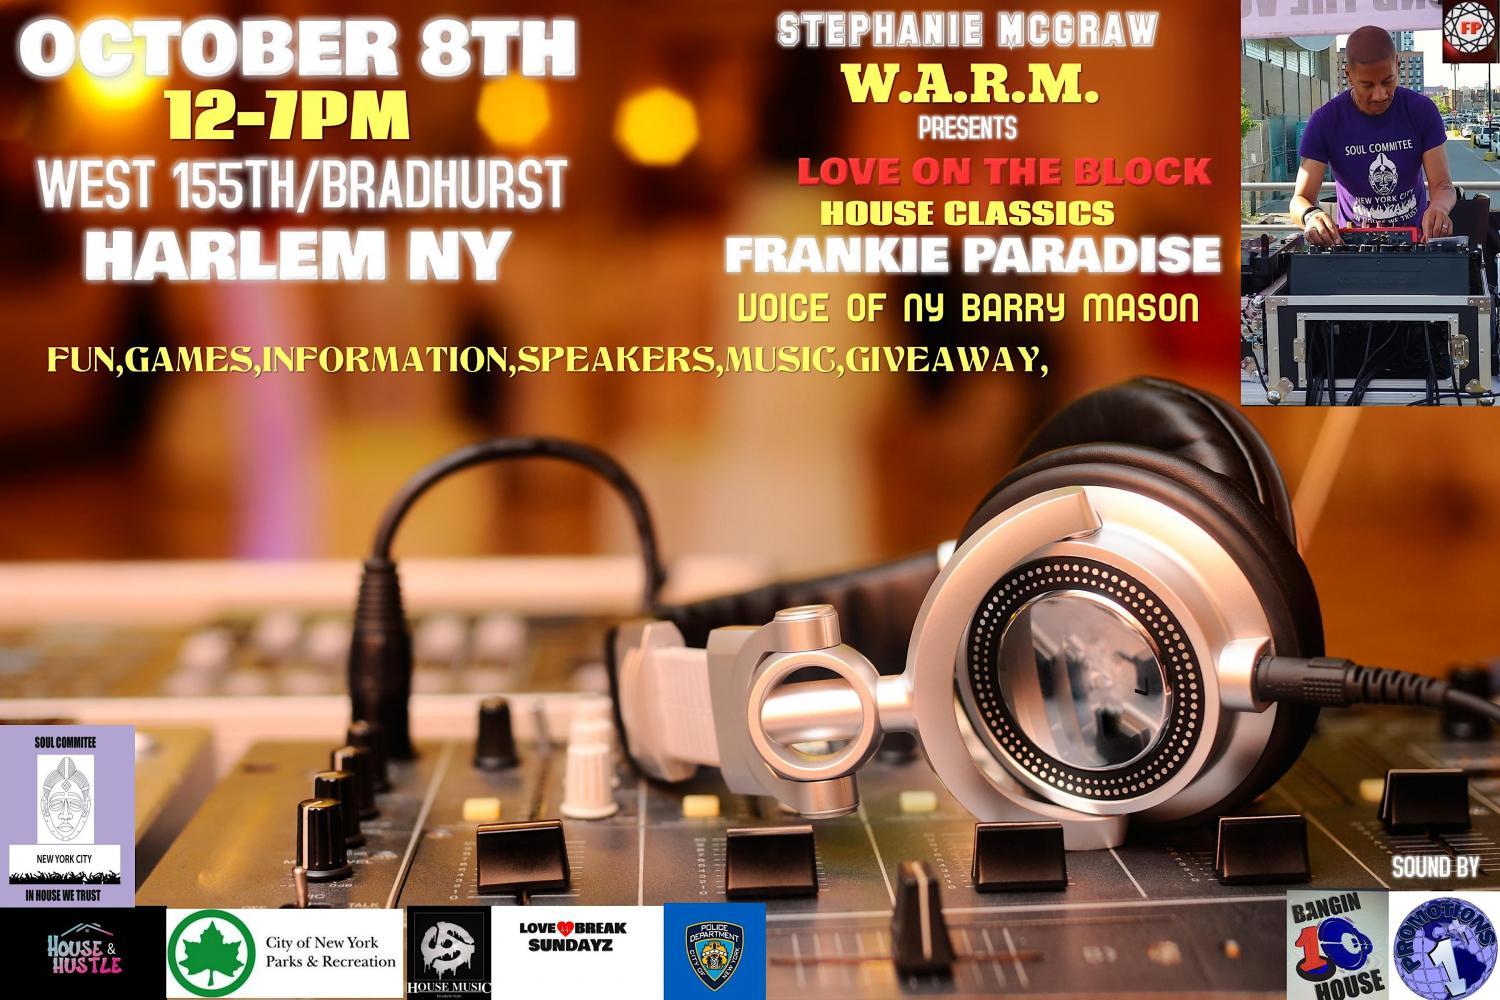 Free Harlem Event Love on the Block Presents Warm Block Party Dj Frankie Paradis
Sat Oct 8, 12:00 PM - Sat Oct 8, 6:00 PM